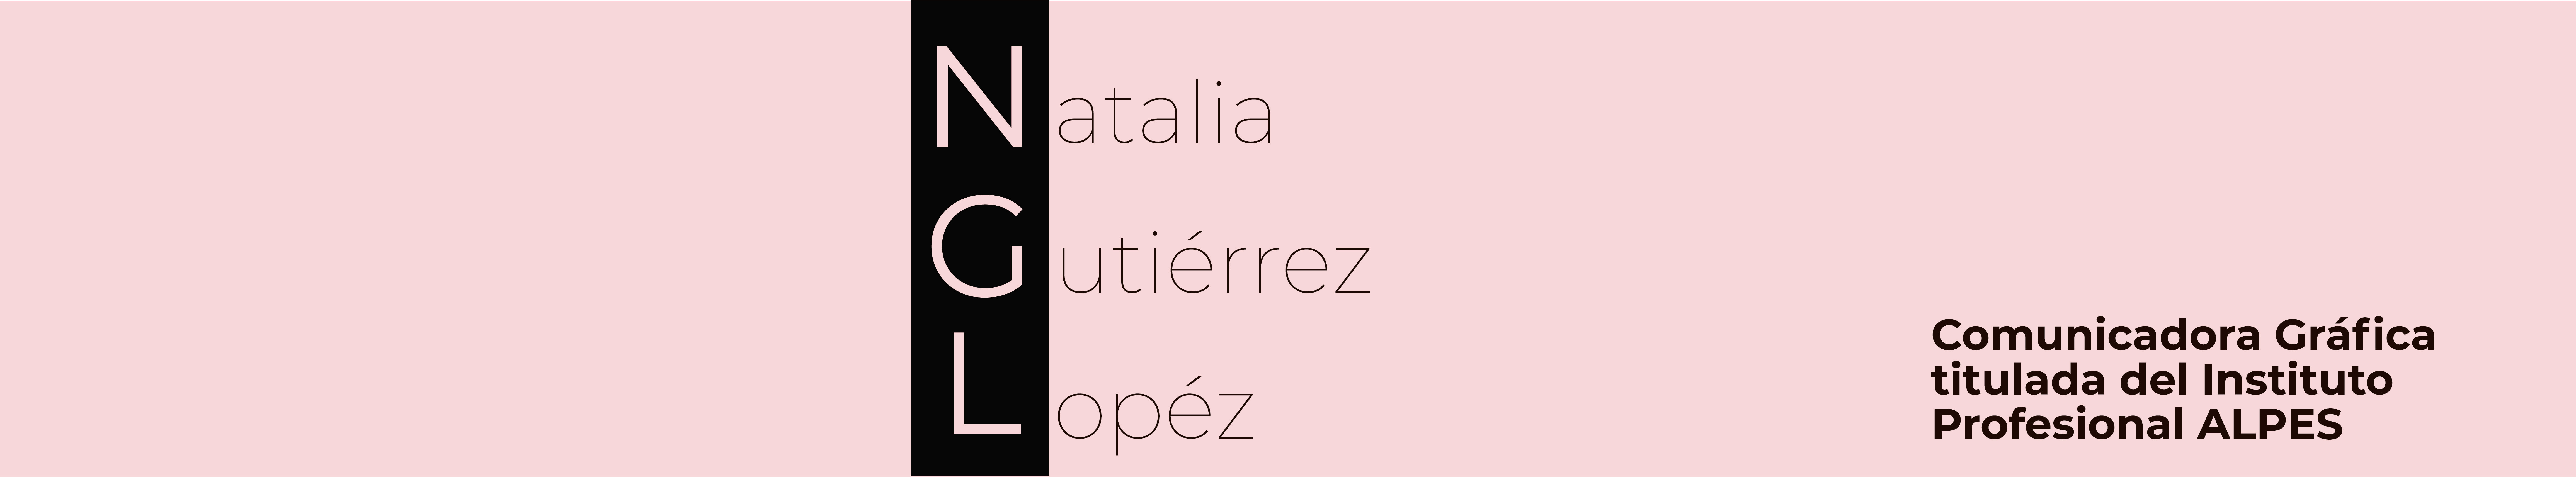 Natalia Gutiérrezs profilbanner